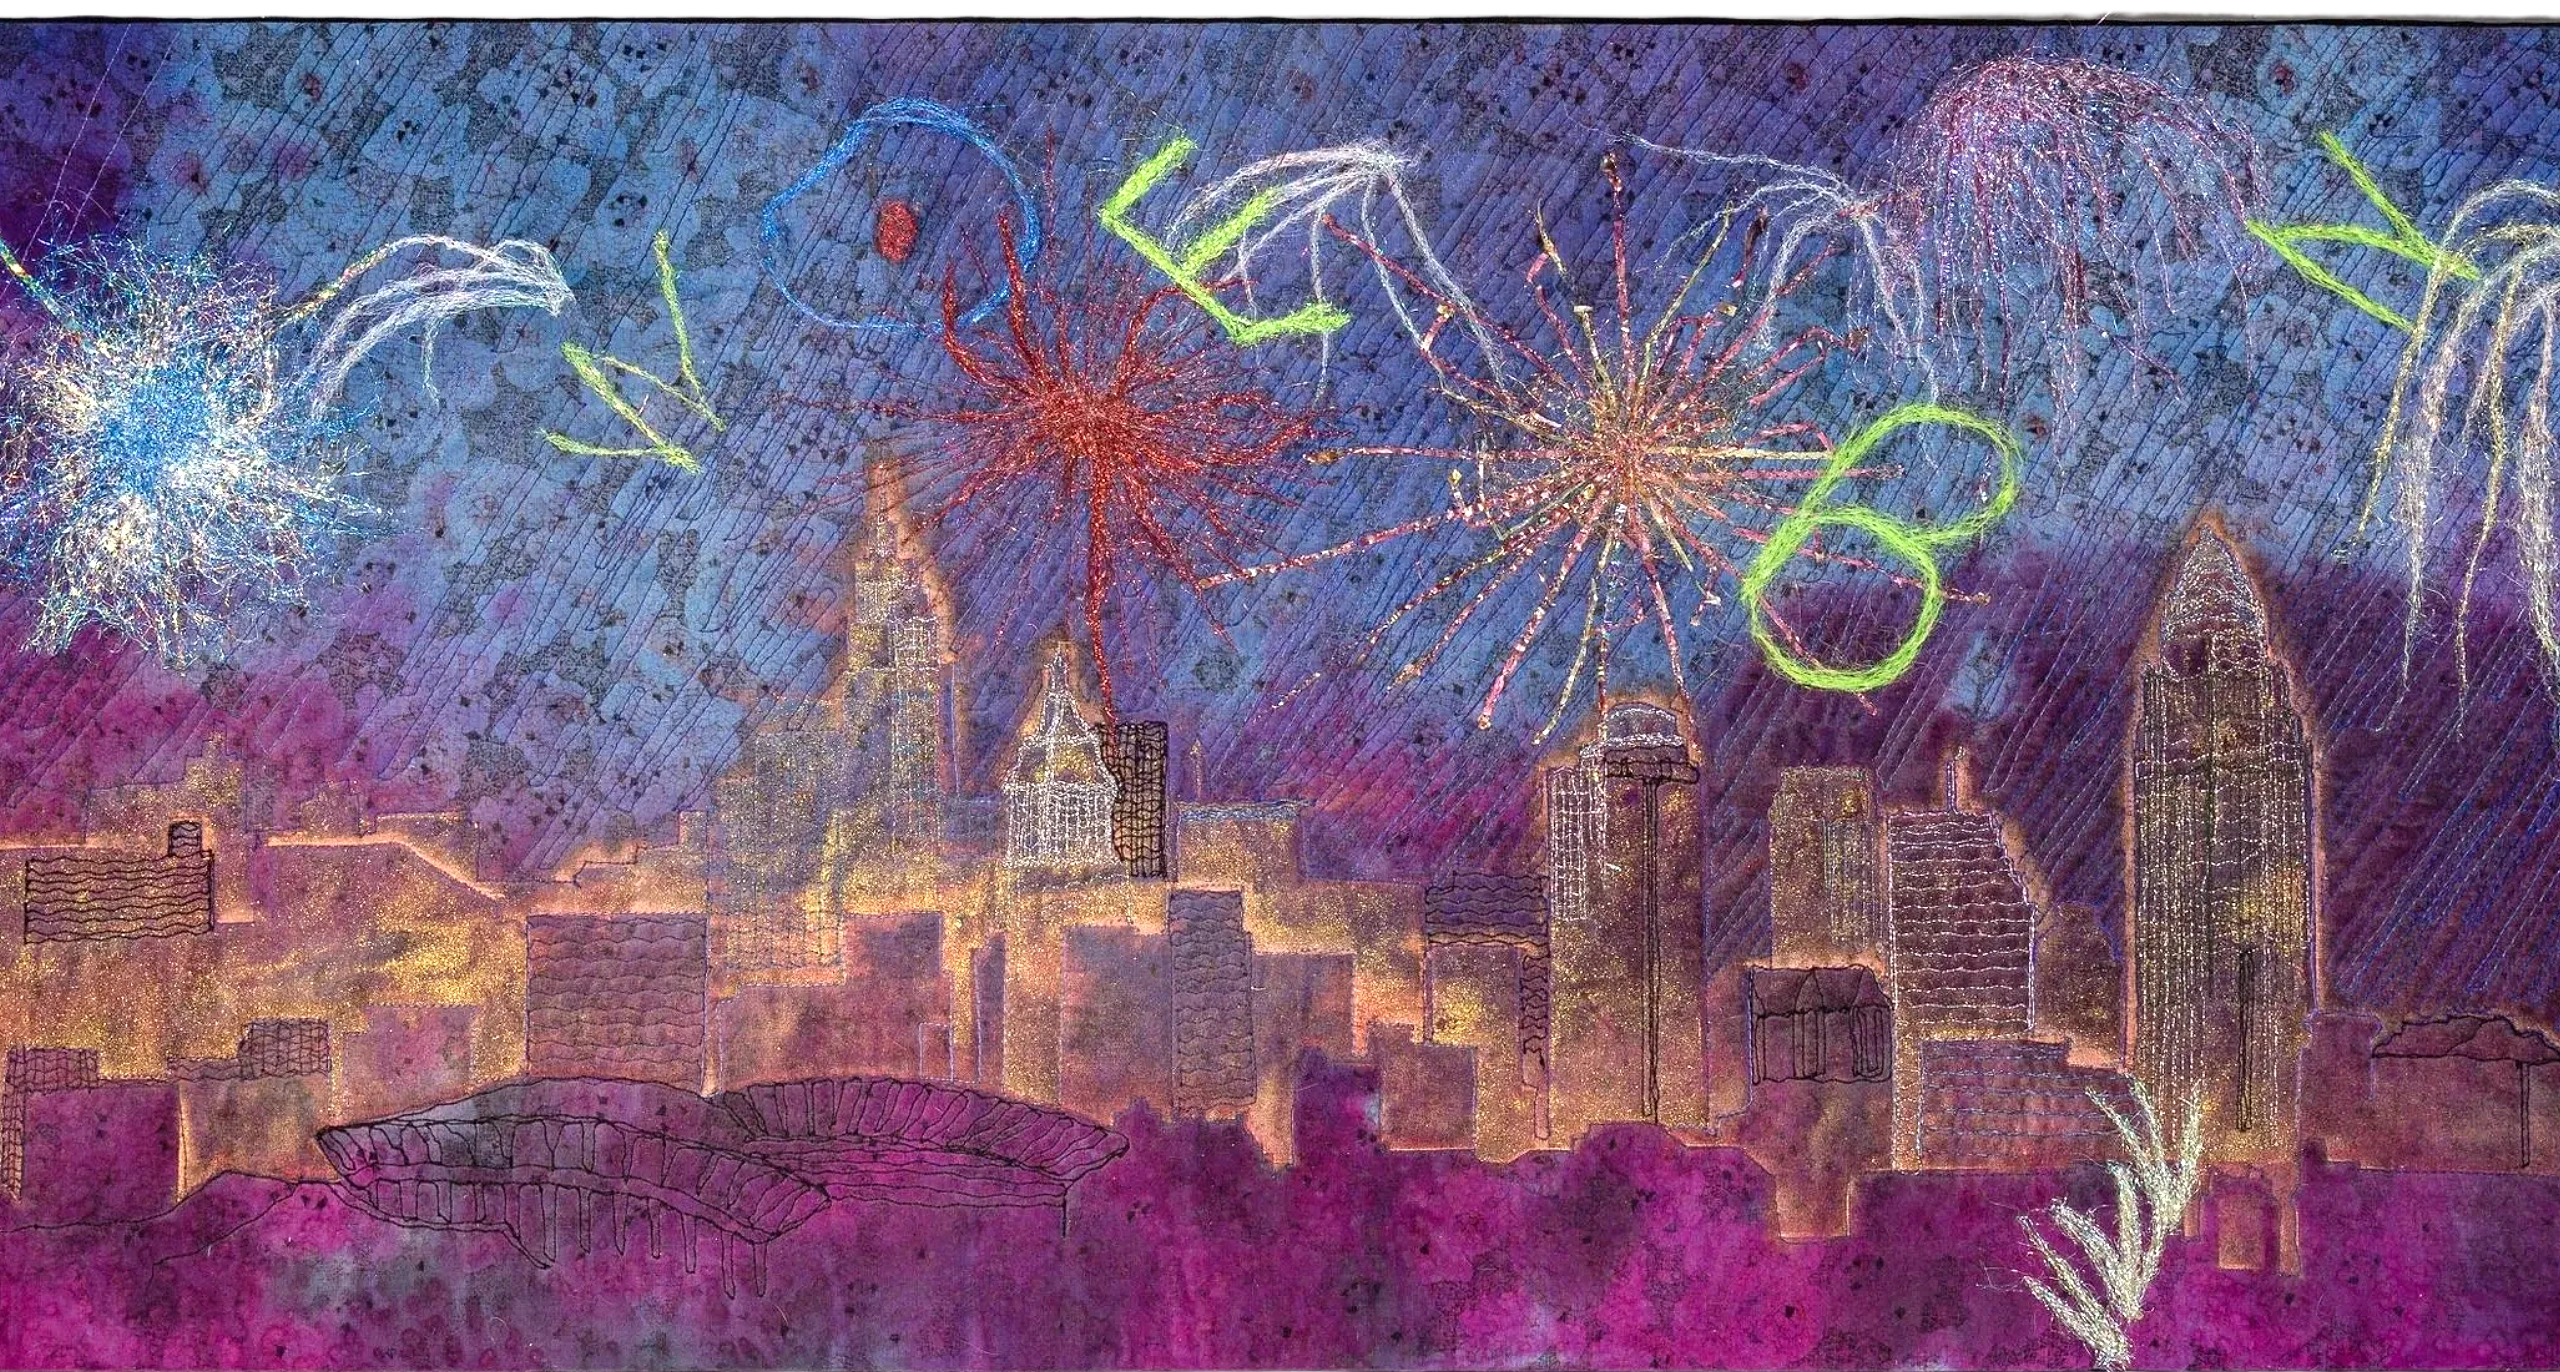 Cityscape, Fireworks, night sky, architecture, art quilt, glimmering, purple, blue, copper, thread